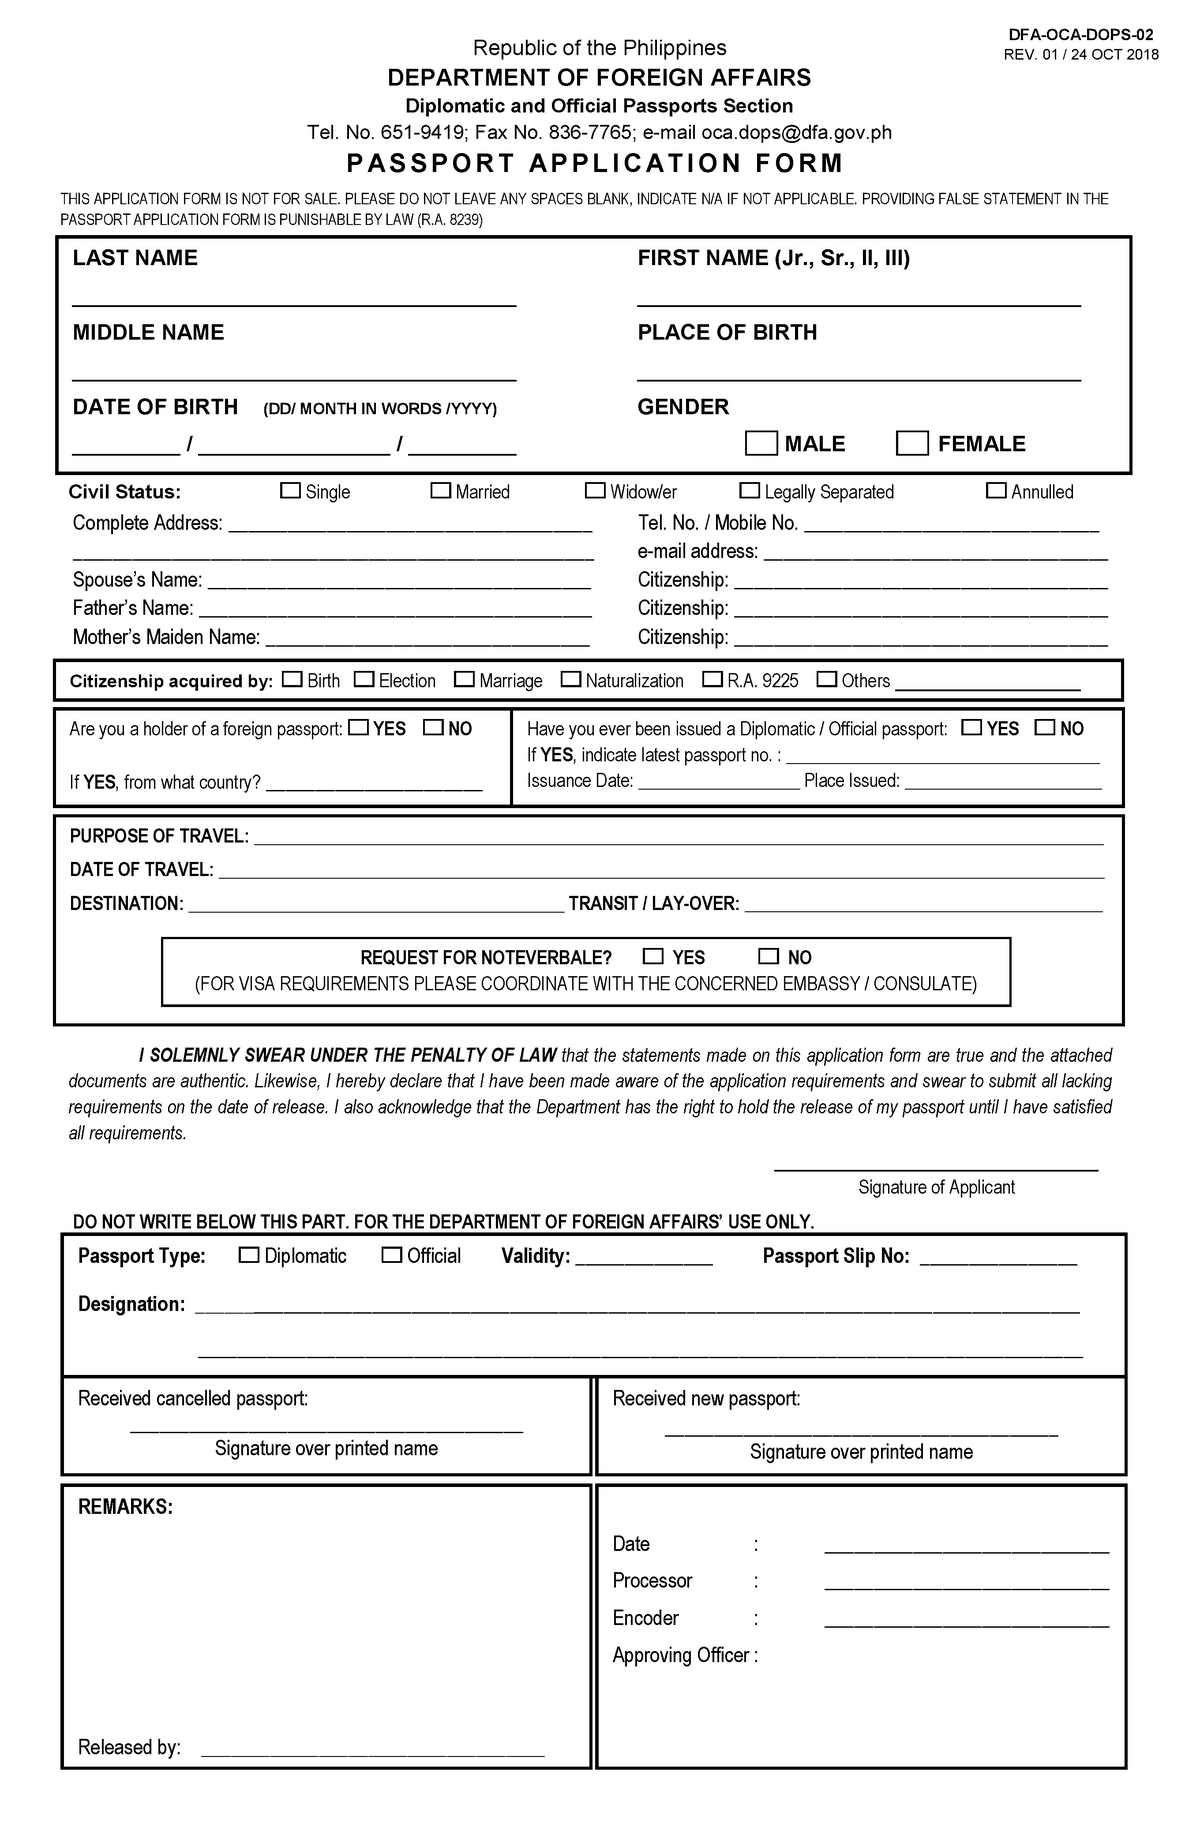 DOPS Passport Application Form Rev24Oct2018 - DFA-OCA-DOPS- 02 Republic ...